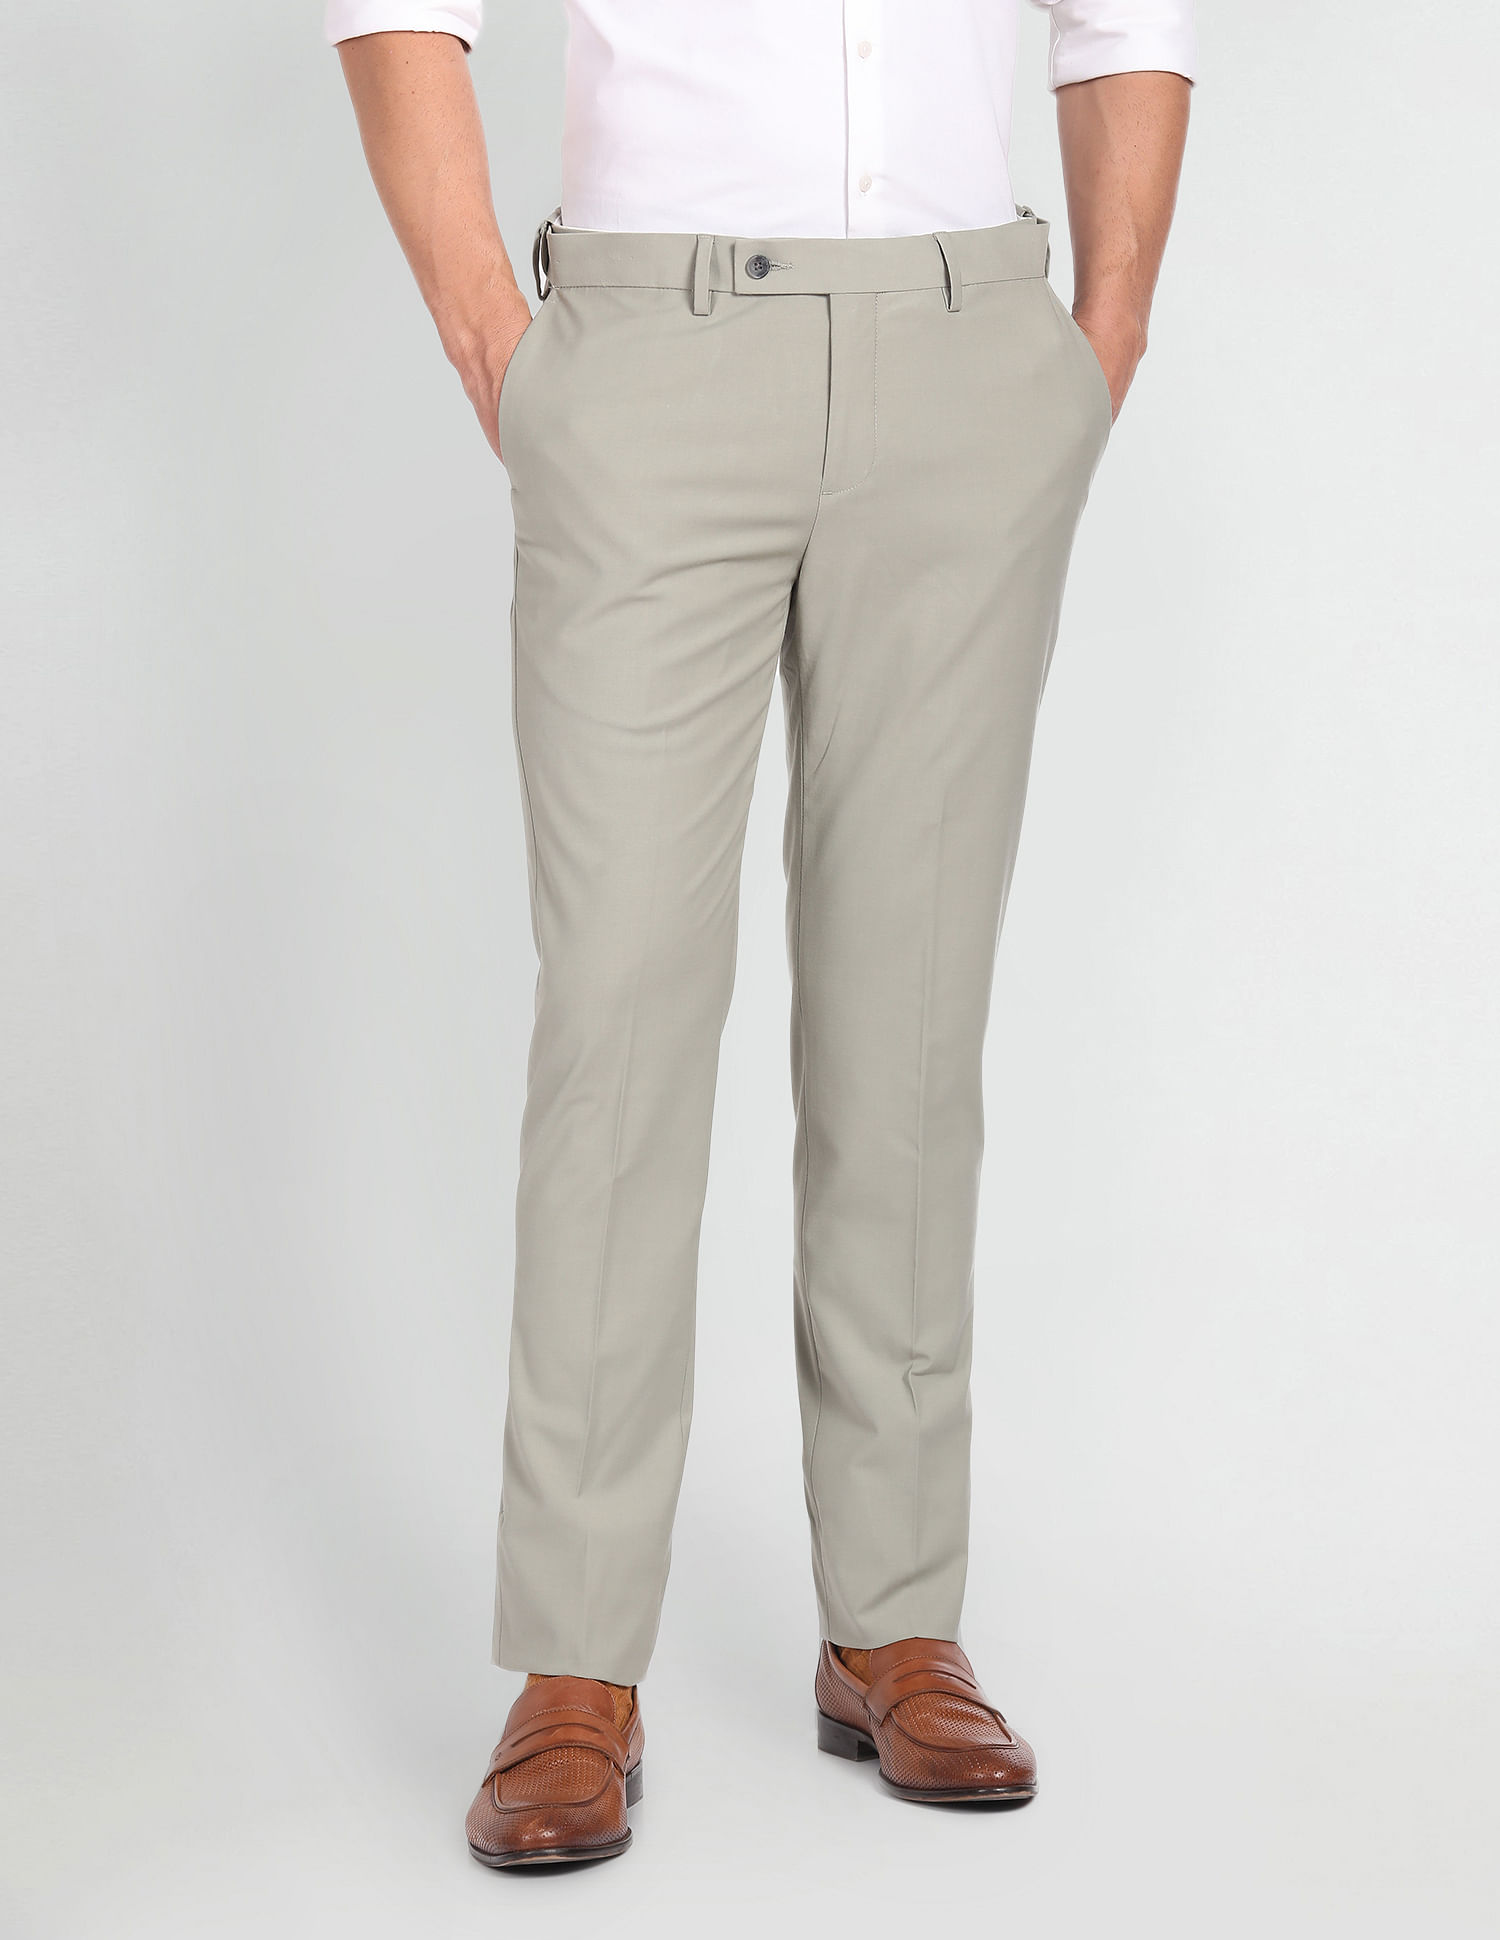 Ayolanni Men Skinny Cotton Pants Parachute Elastic Waist Twill Trousers  Slim Fit Streetwear Pant with Pockets - Walmart.com